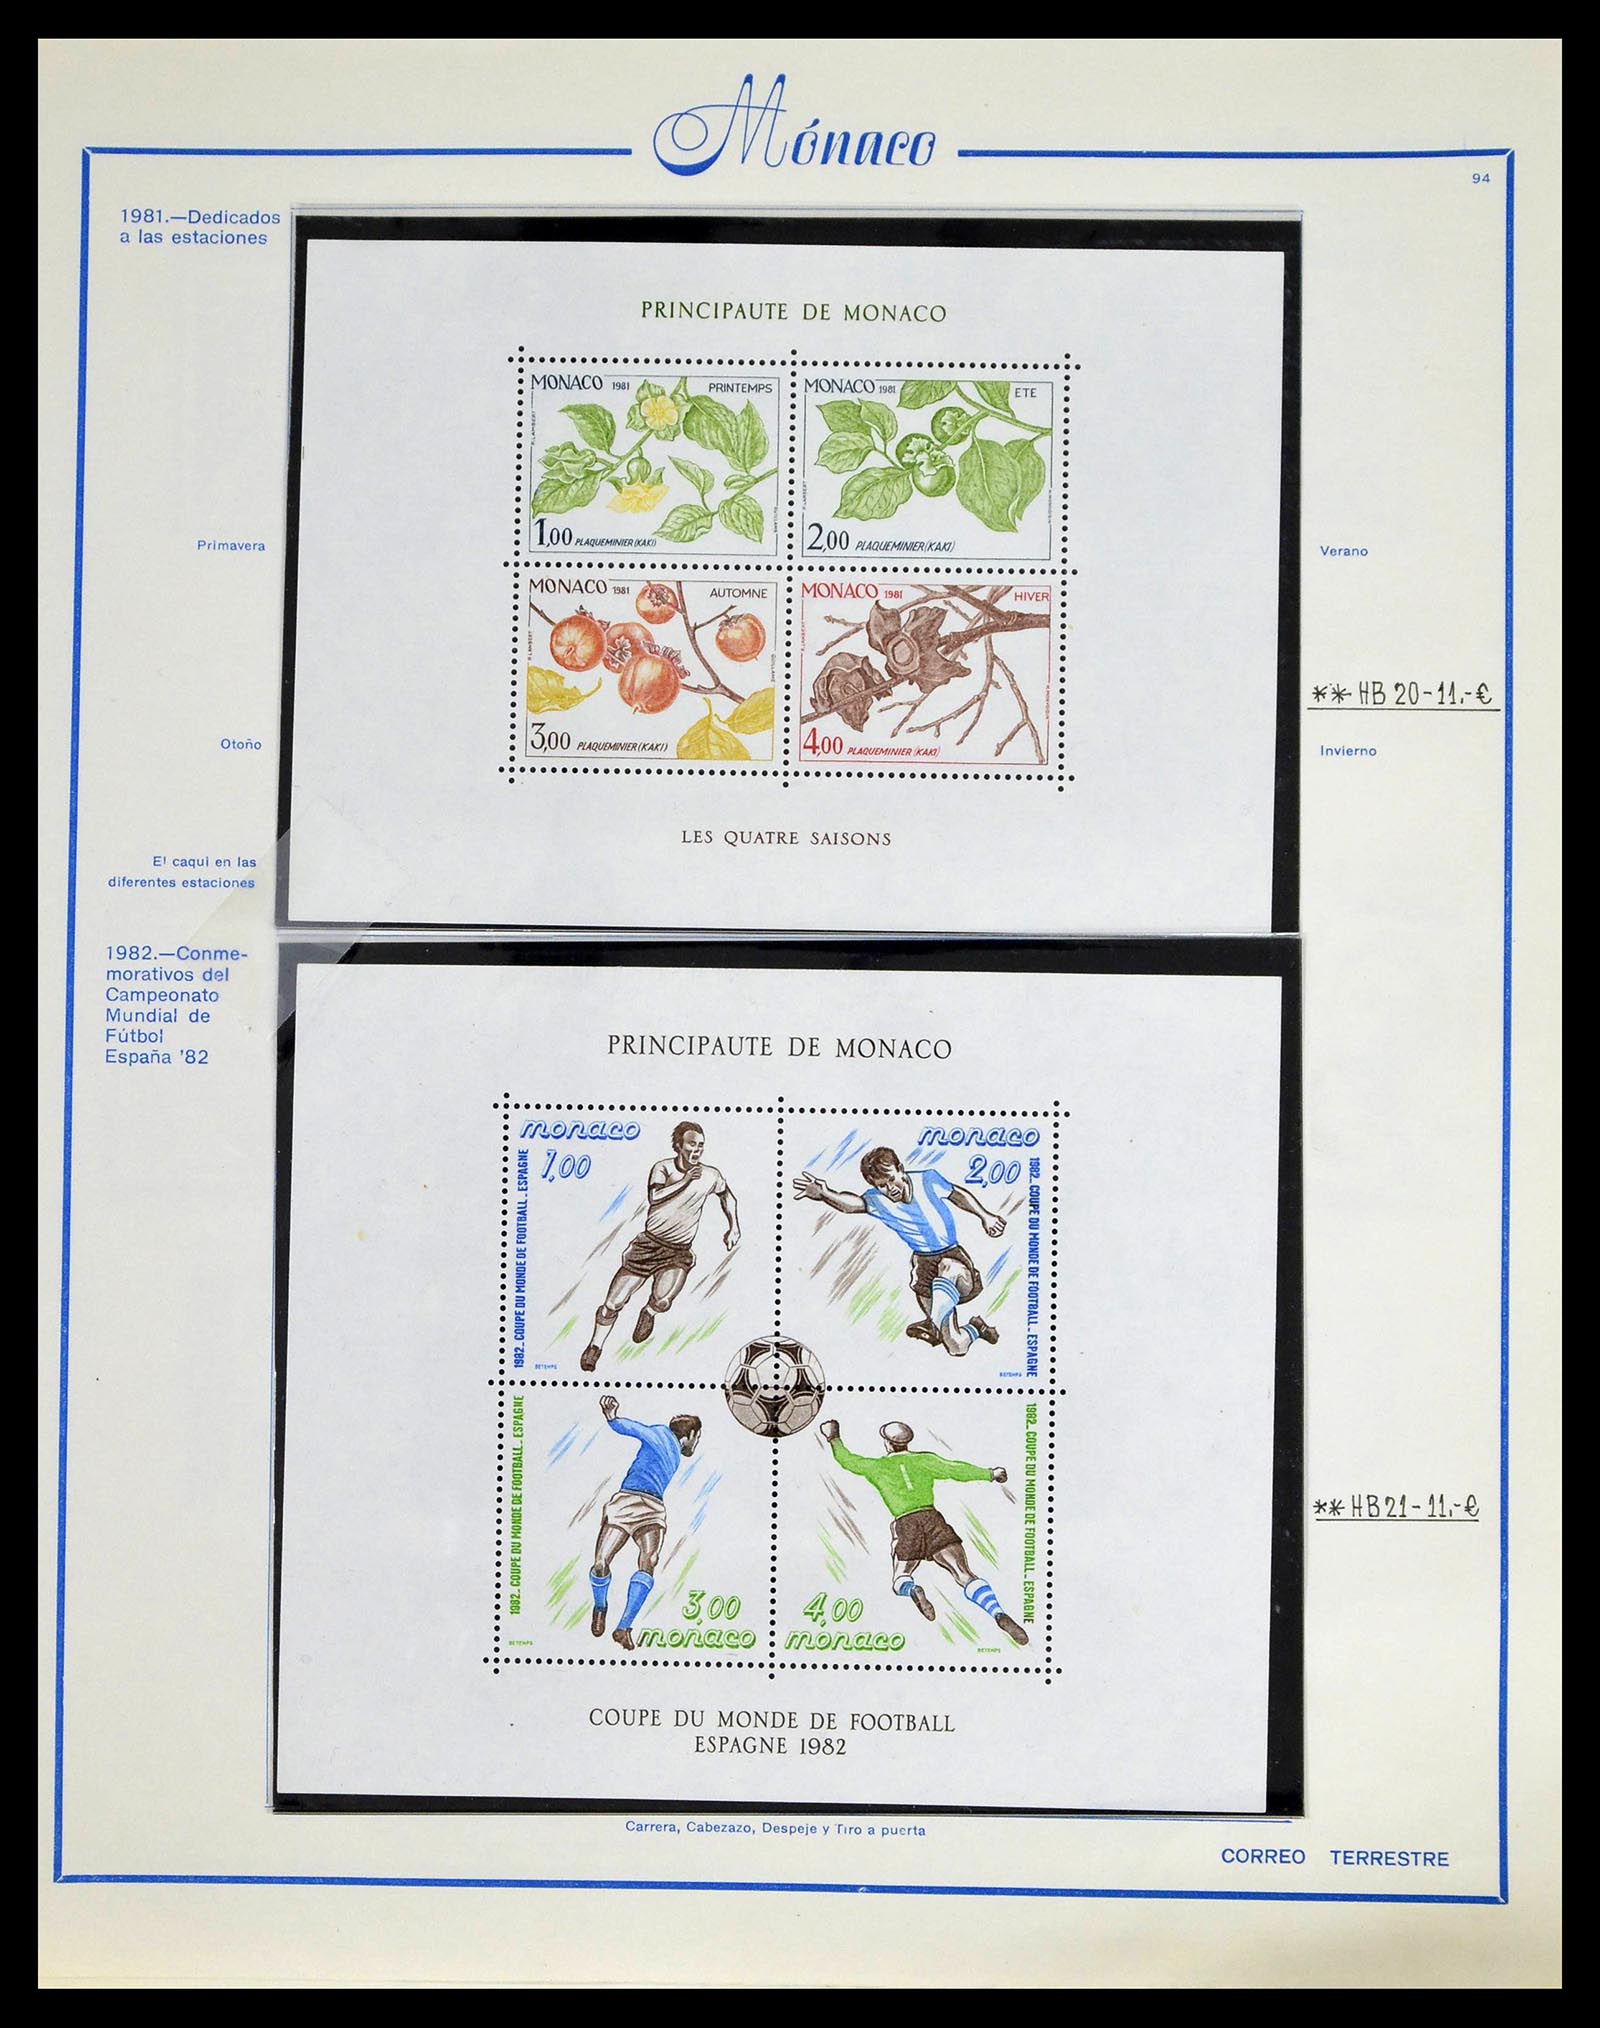 39205 0116 - Stamp collection 39205 Monaco 1885-1982.